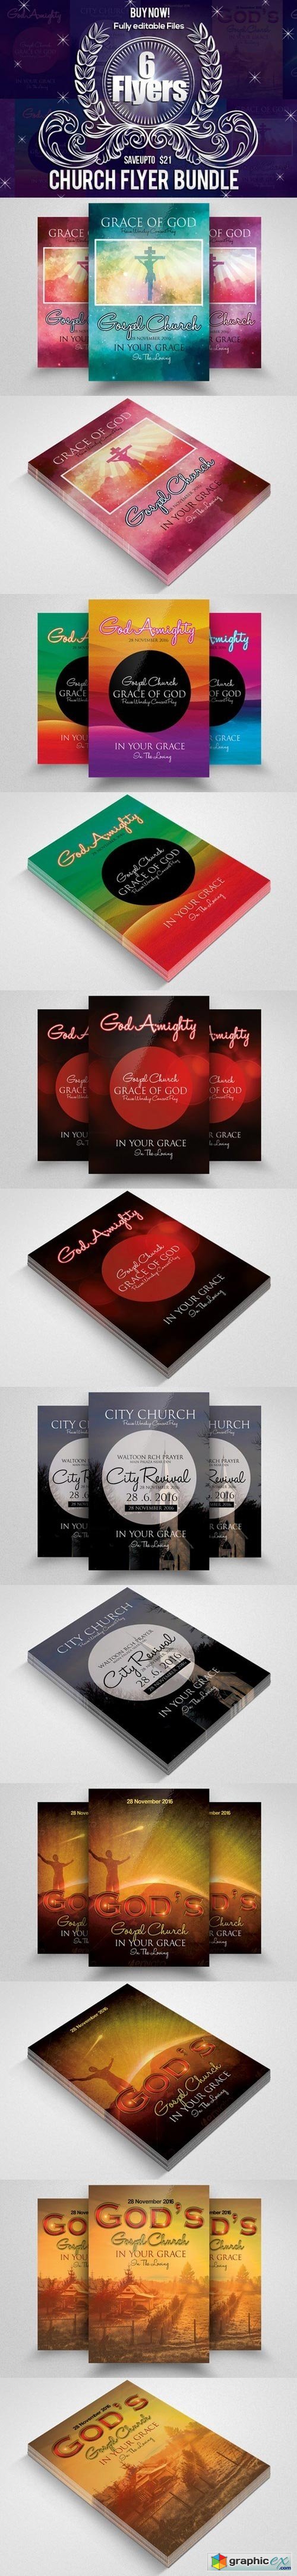 6 Jesus Church Flyer Bundle